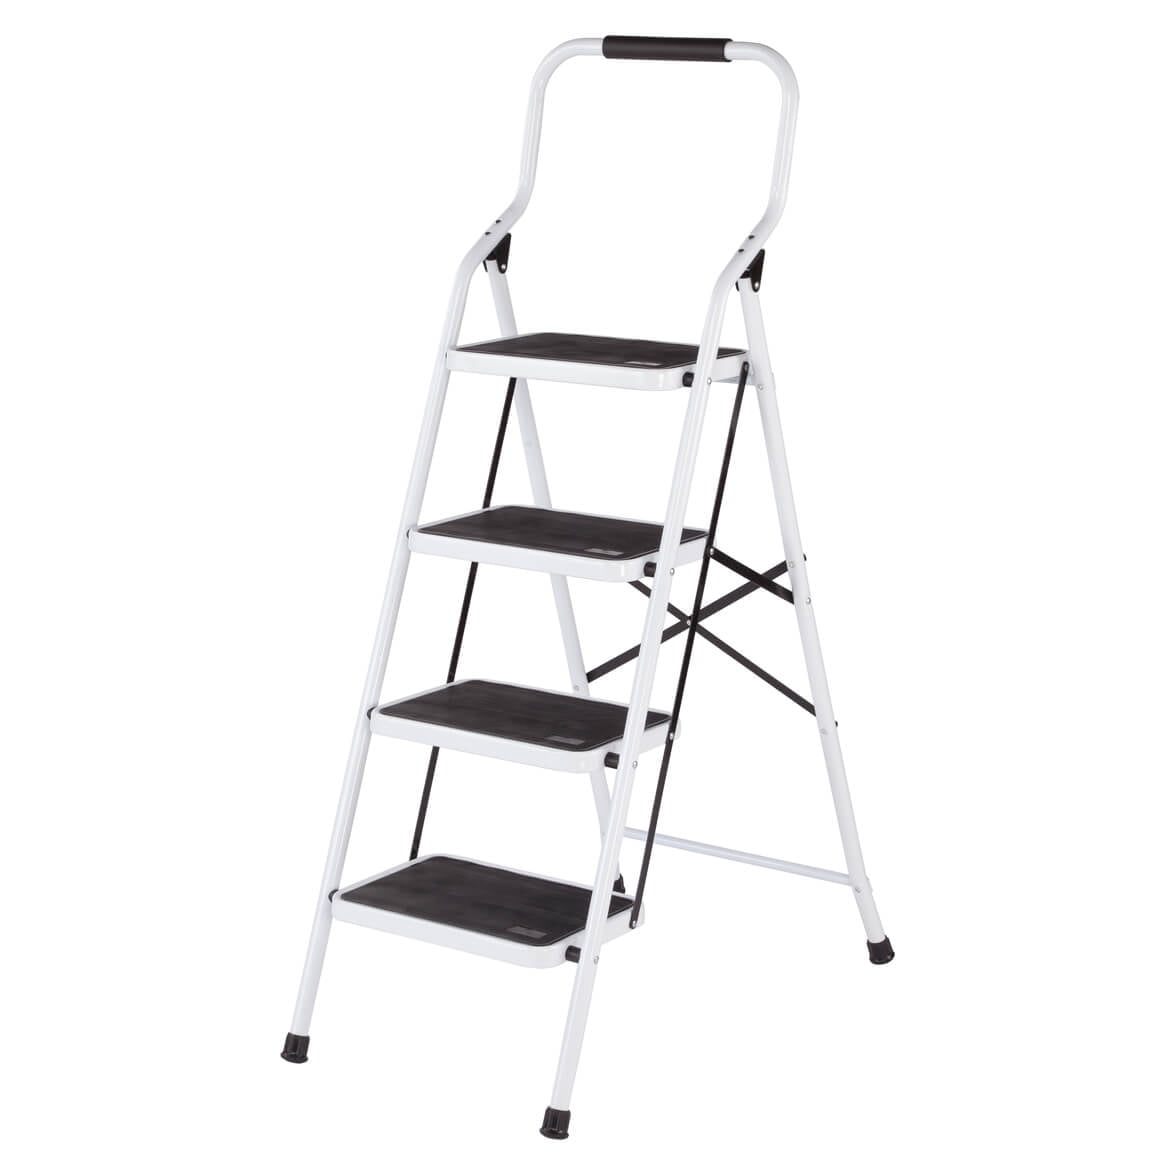 2-in-1 Padded Handle and Backrest, LivingSURE Folding 4-Step Safety Ladder 